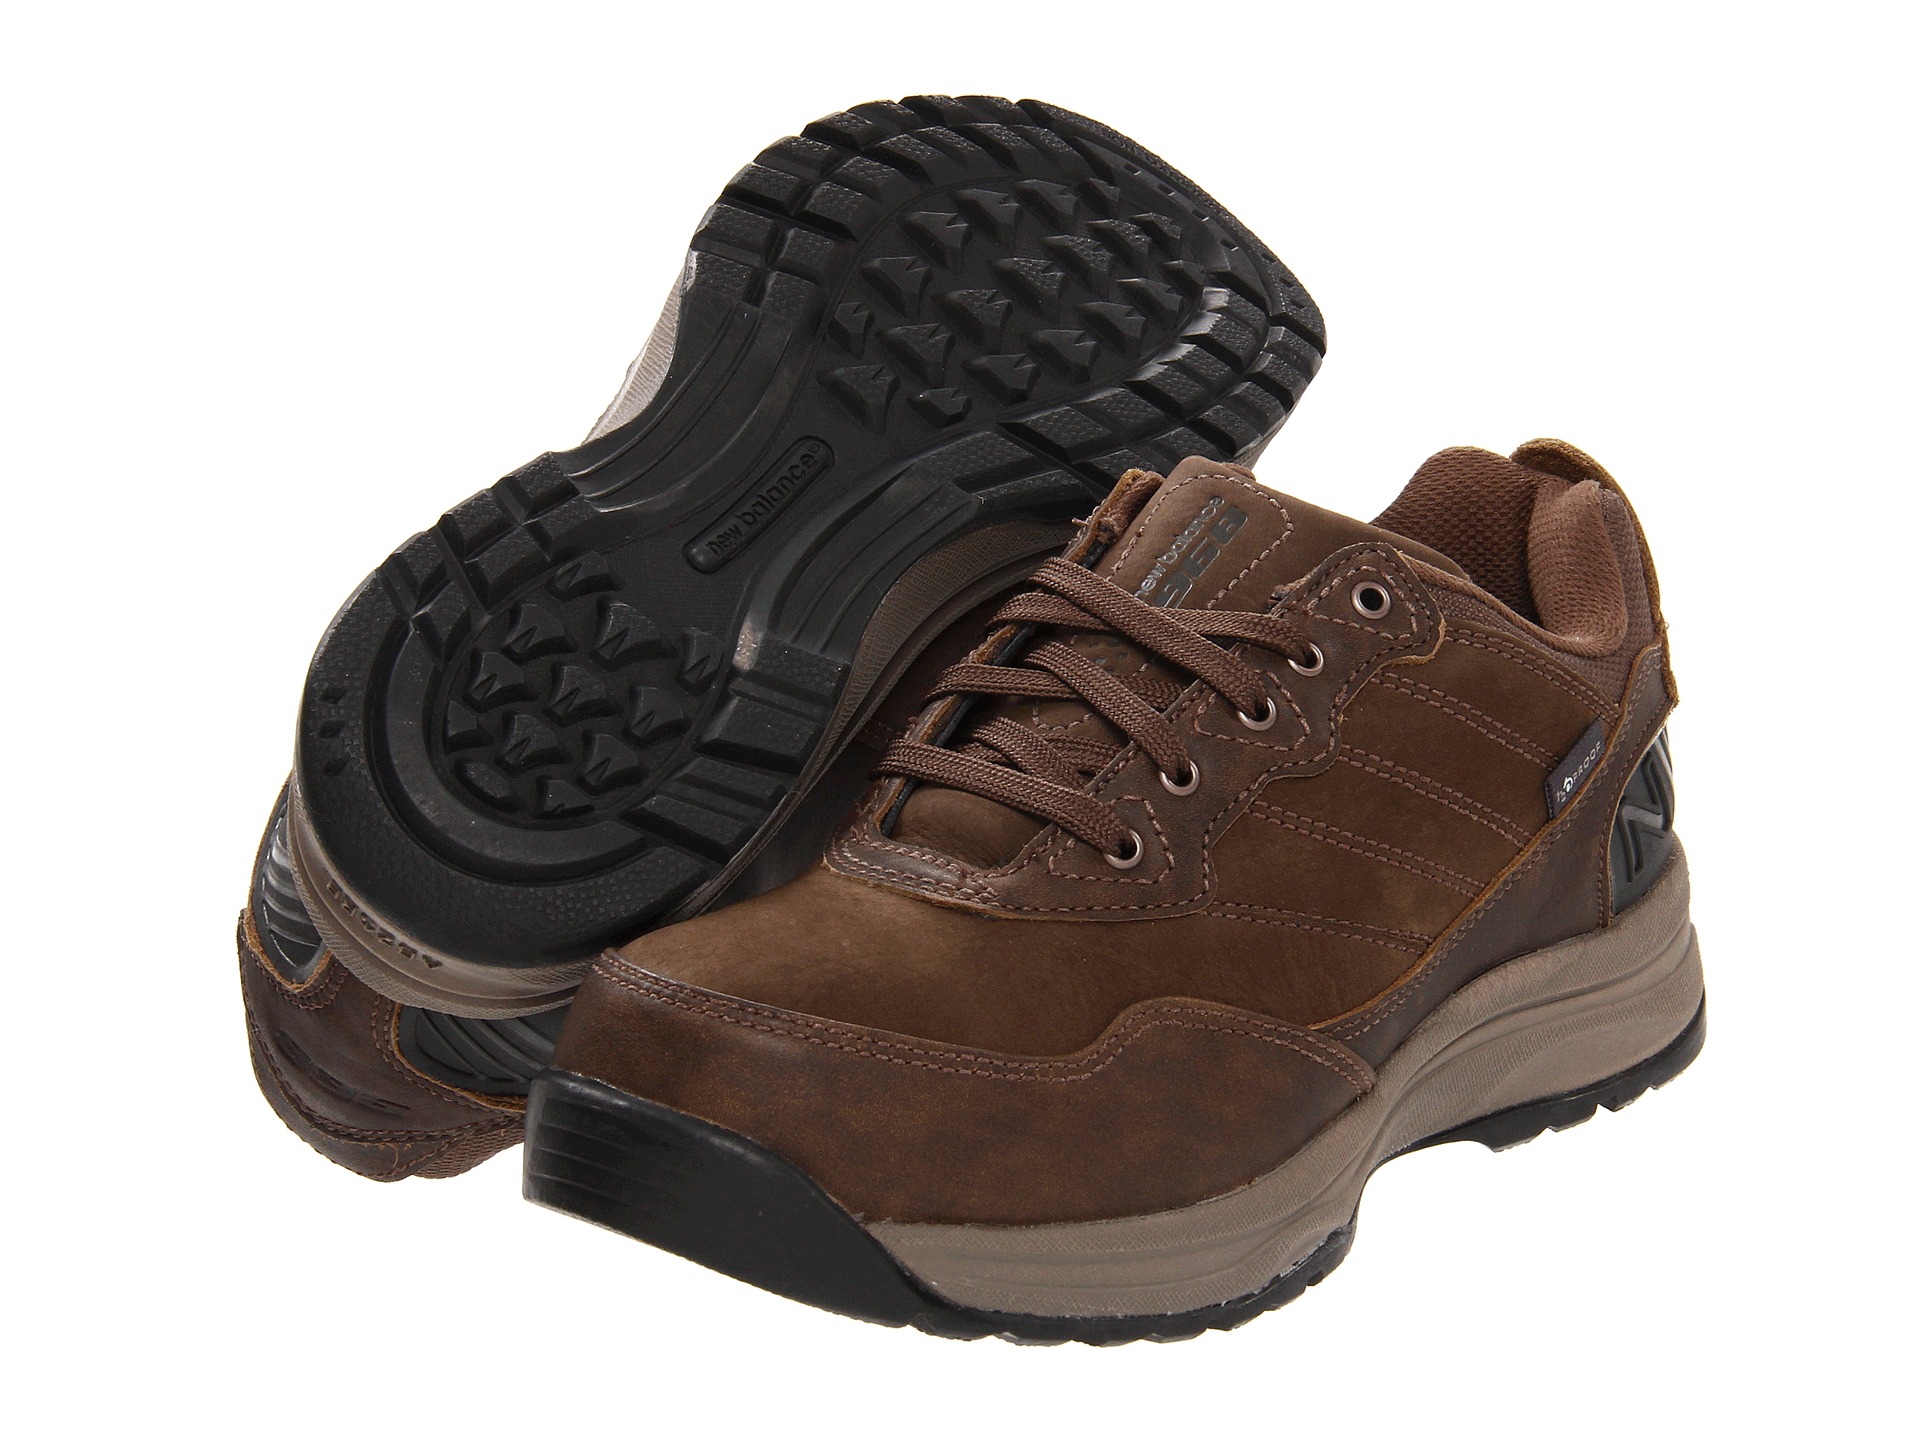 New Balance Ww928, Shoes, Women | Shipped Free at Zappos